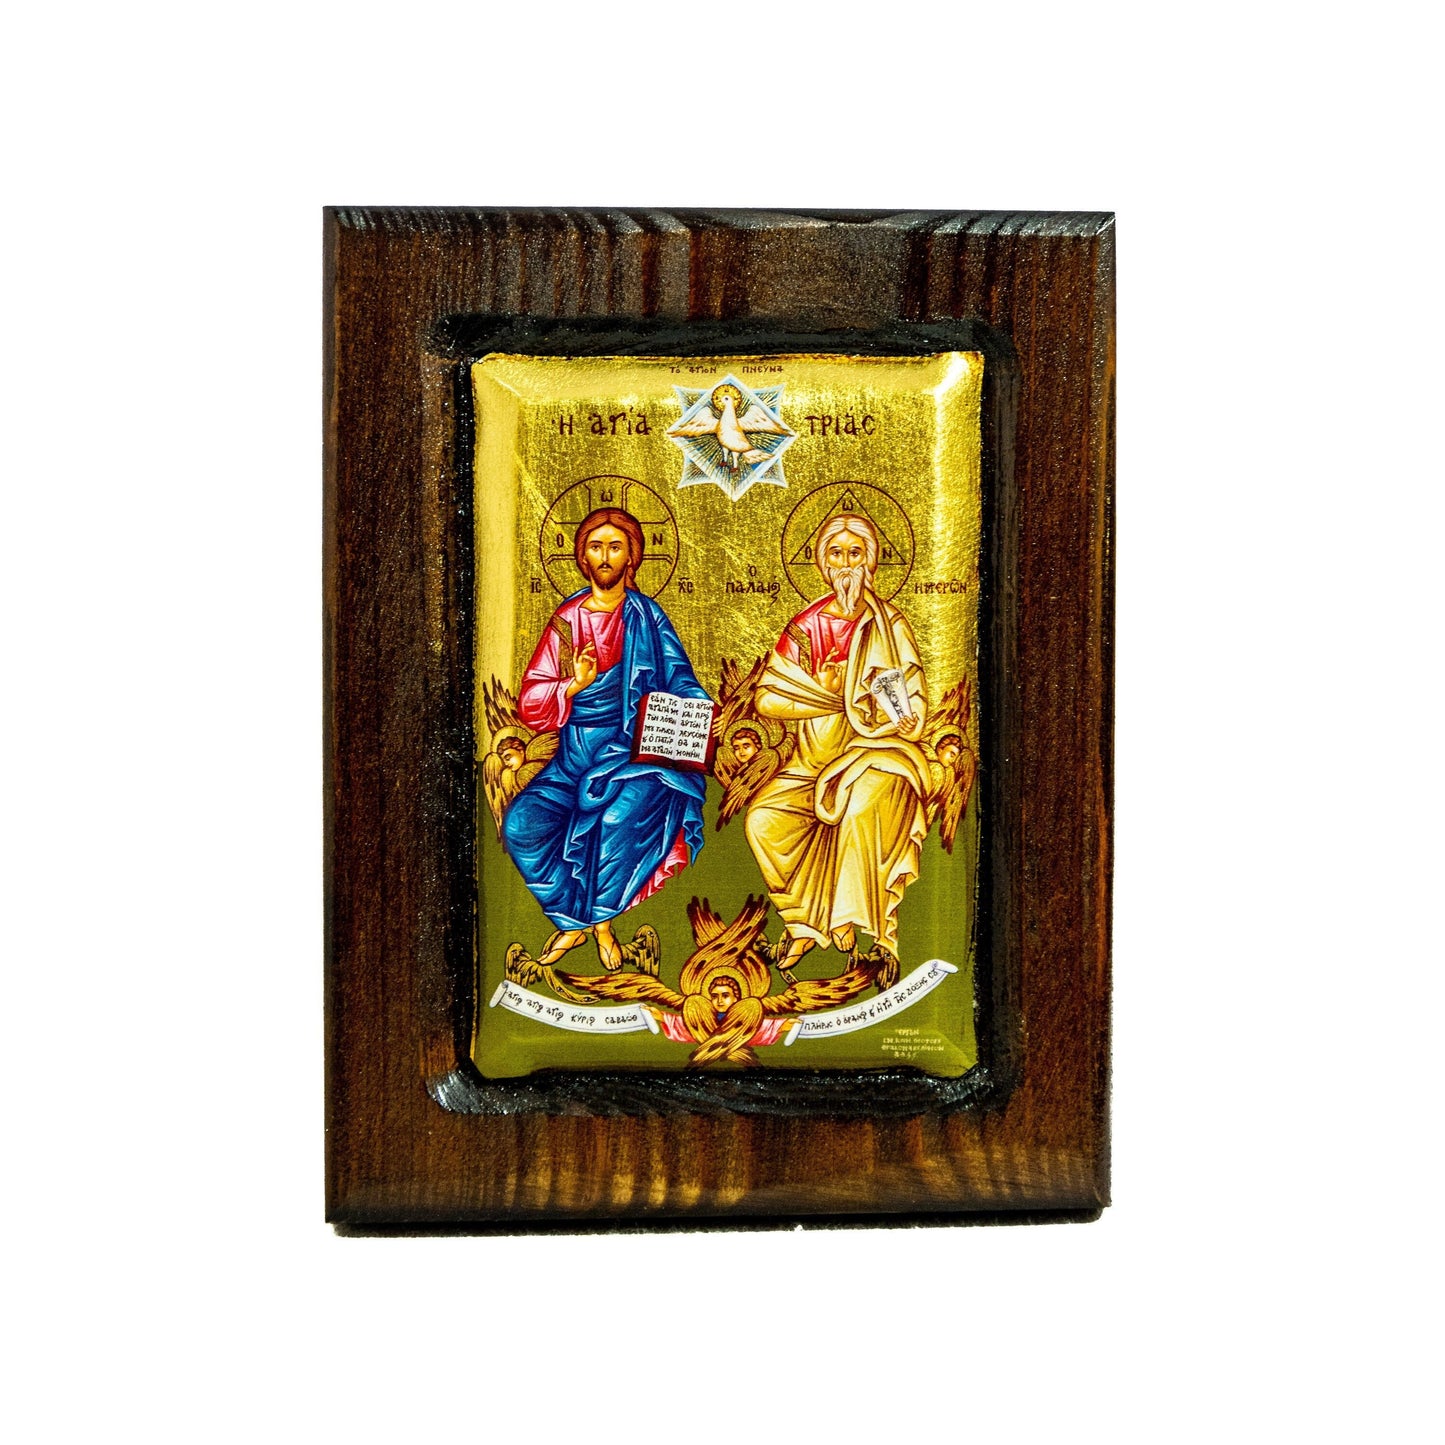 The Holy Trinity icon, Jesus Christ Handmade Greek Orthodox icon, Byzantine art wall hanging on wood plaque w/ gold leaf, religious gift TheHolyArt